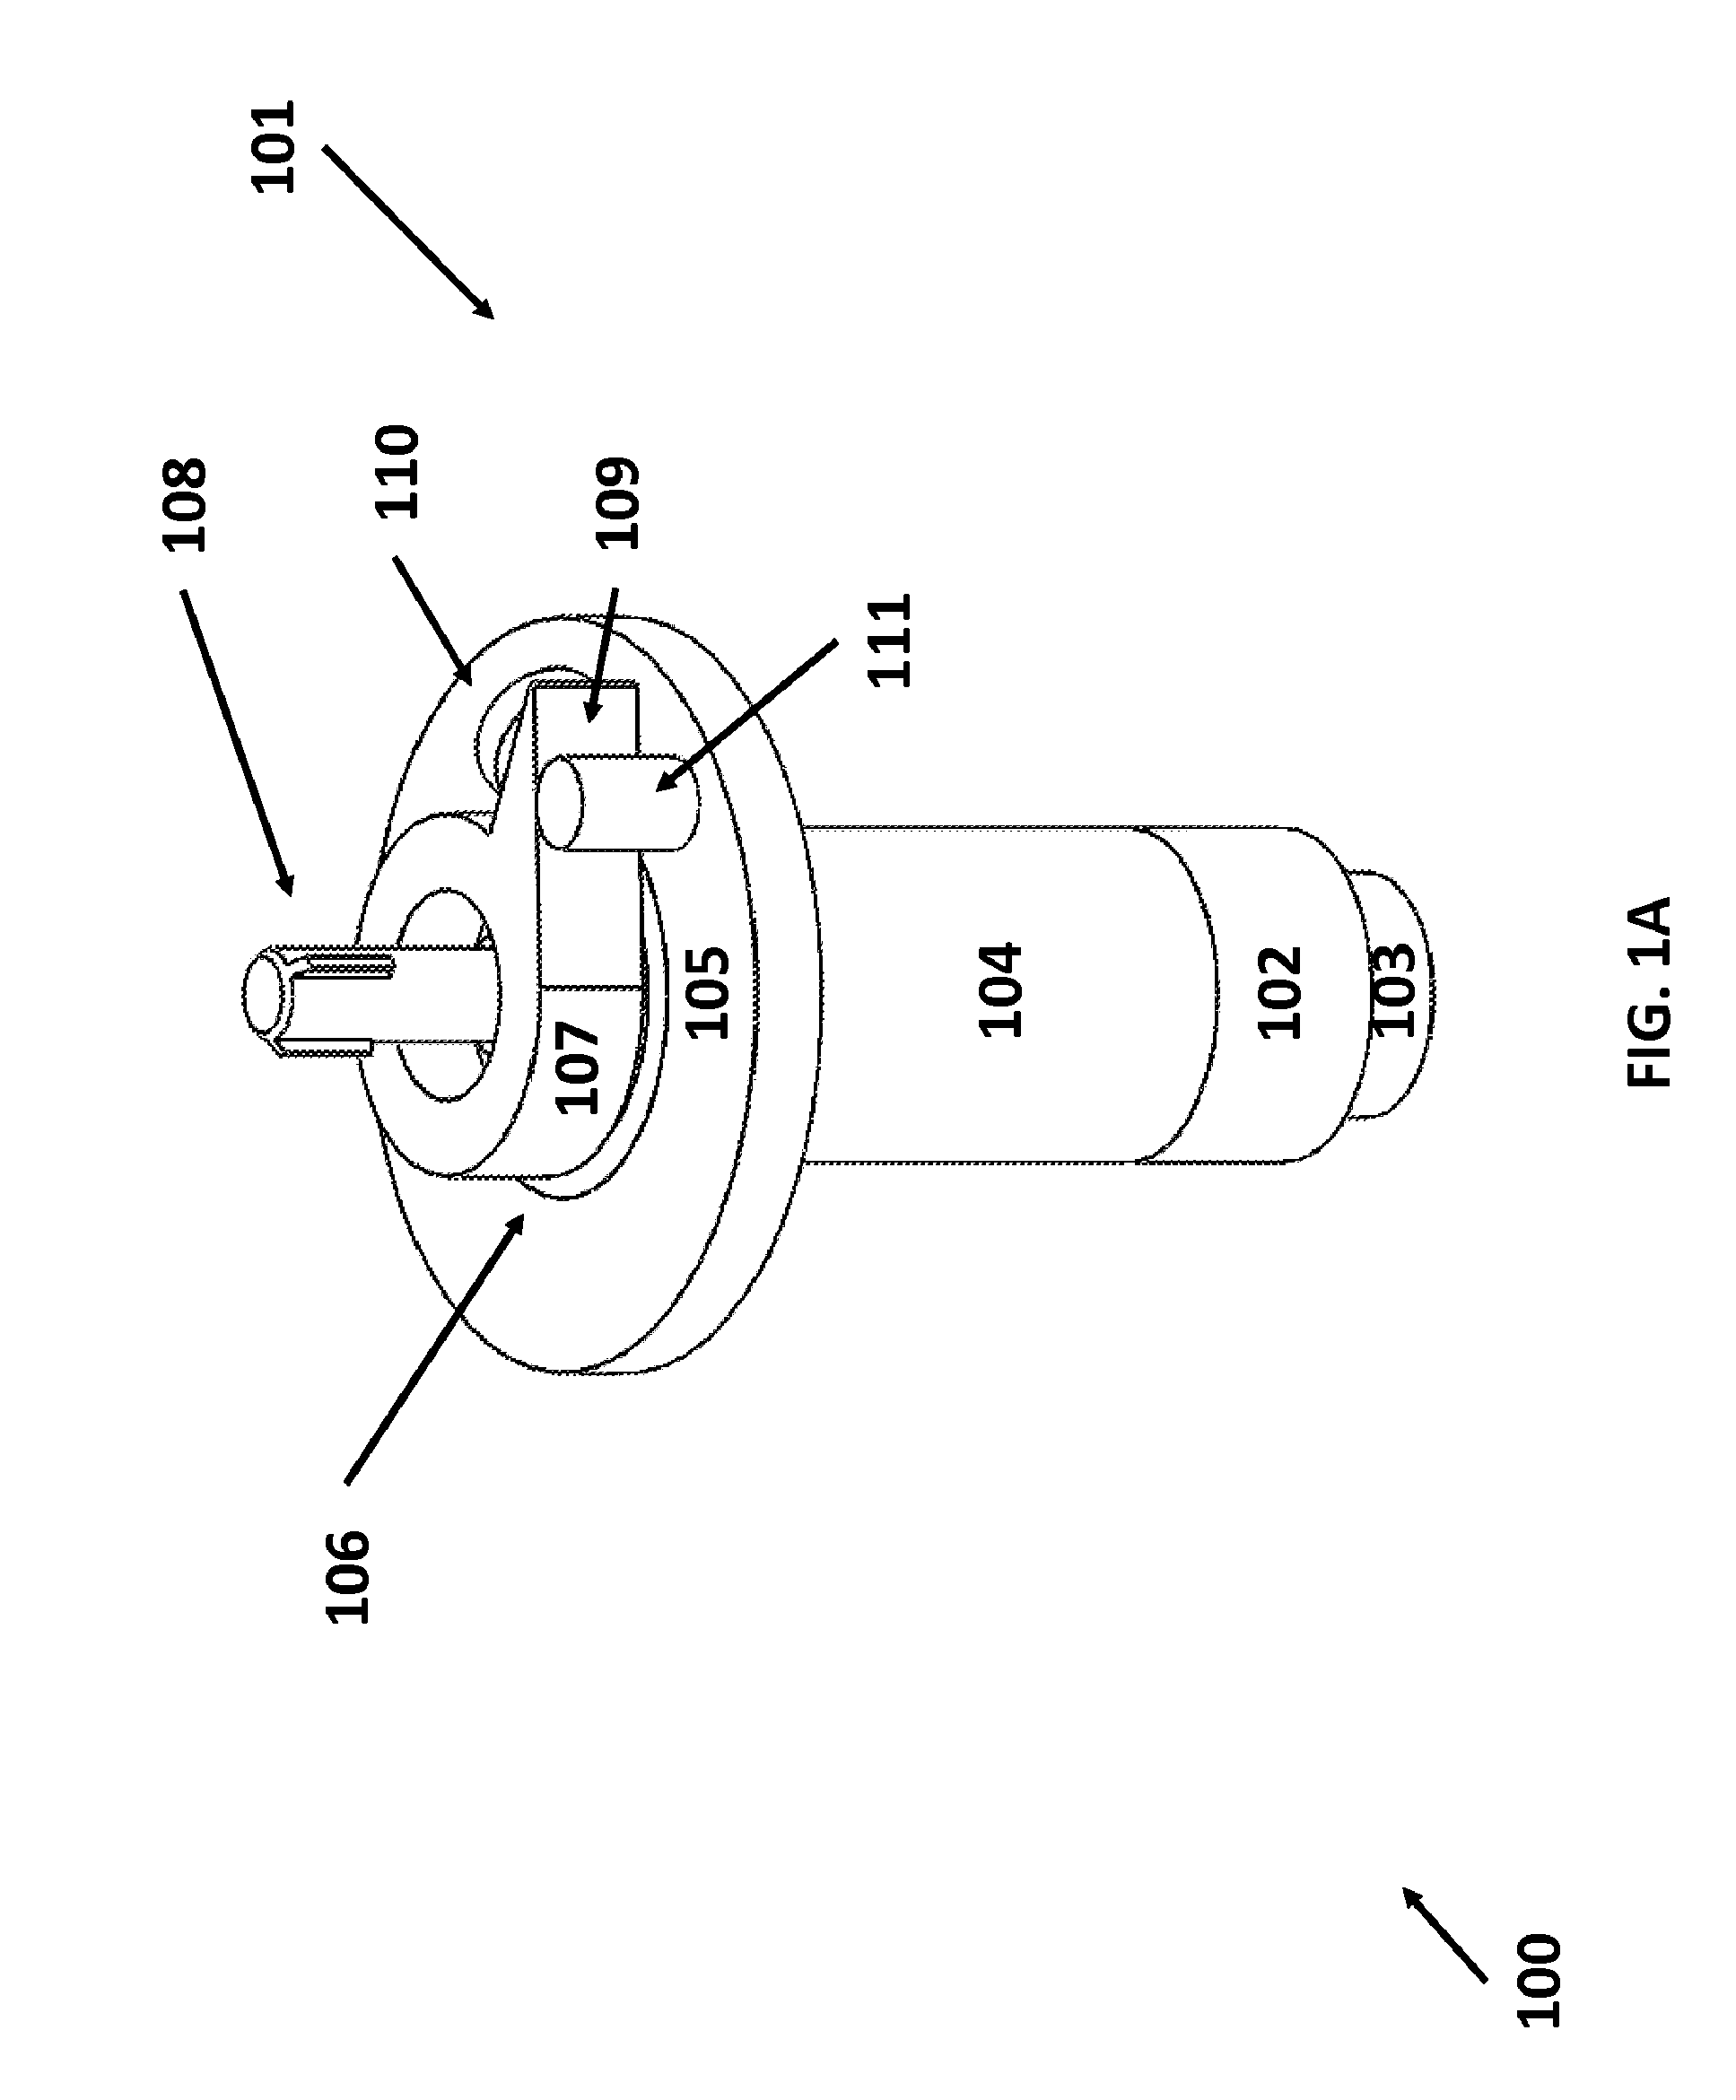 Driver-mounted torque sensing mechanism